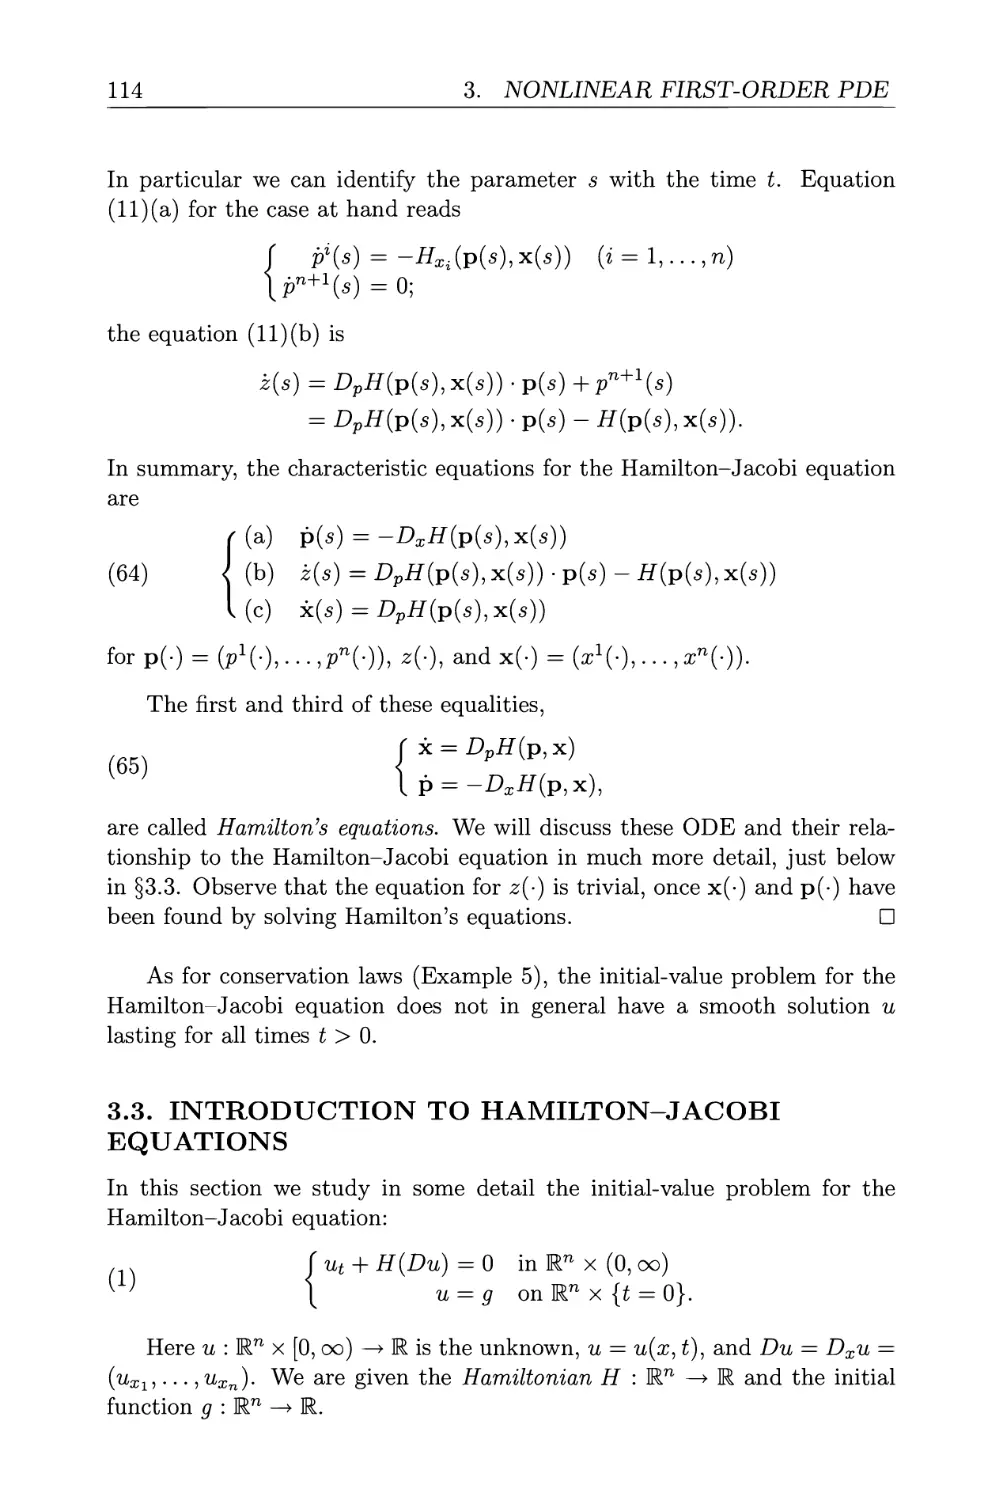 3.3. Introduction to Hamilton-Jacobi equations